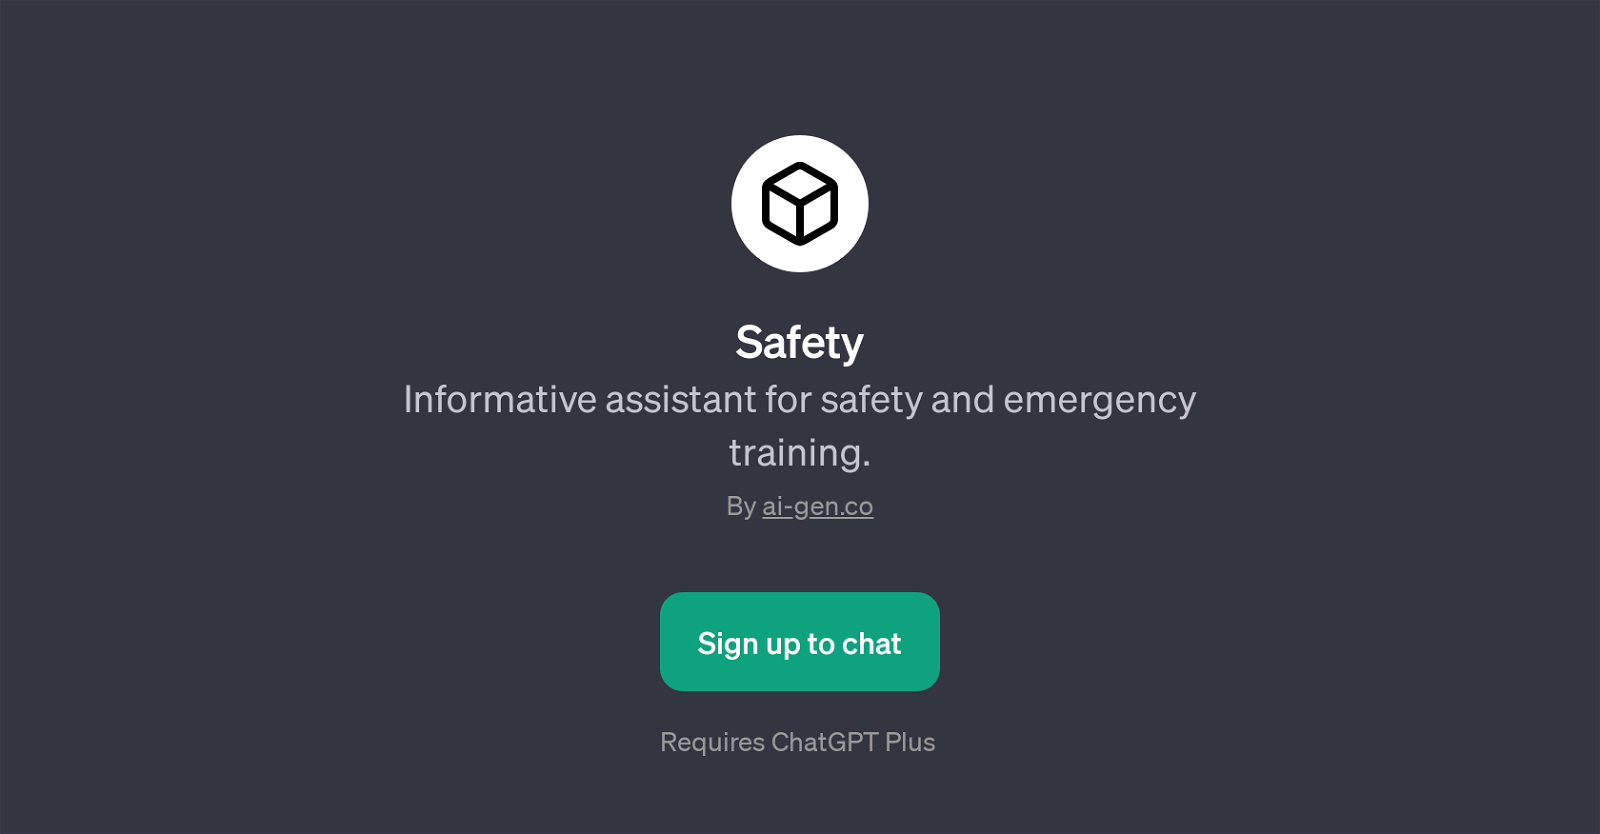 Safety website